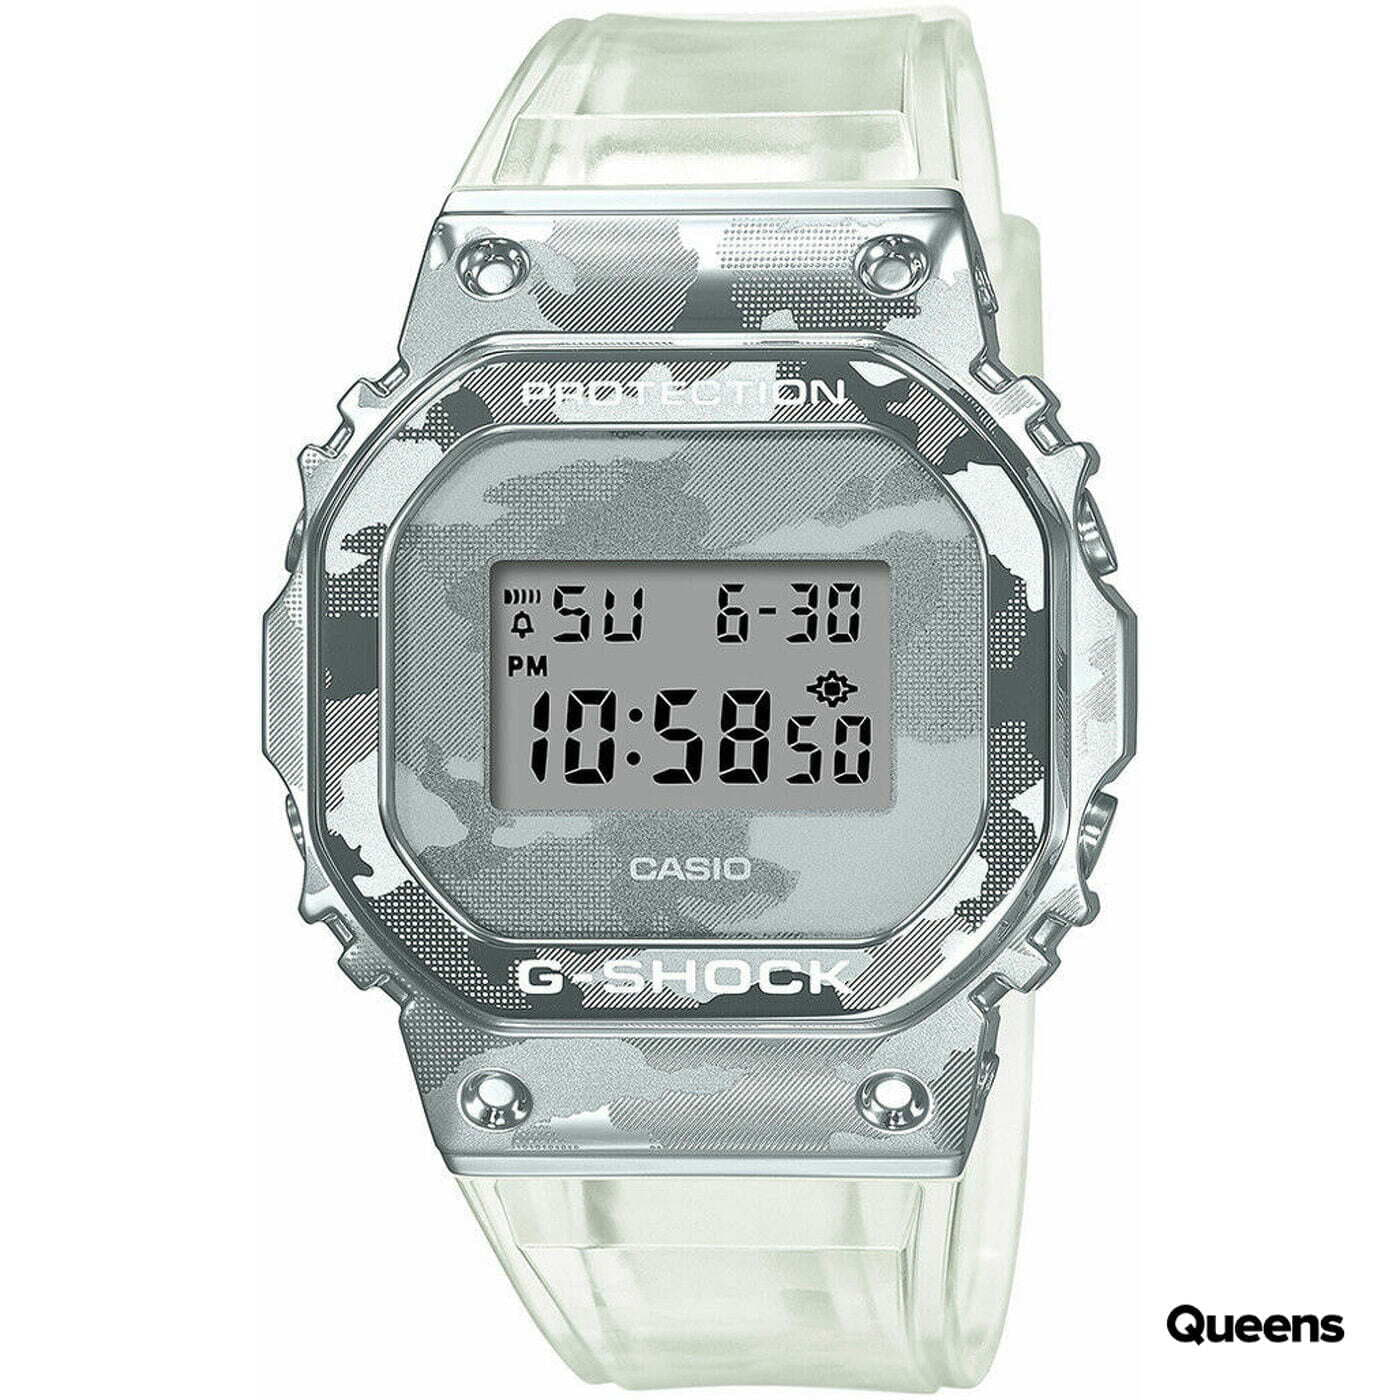 Watches Casio G-Shock GM 5600SCM-1ER "Skeleton Camouflage Series" Transparent/ Camo